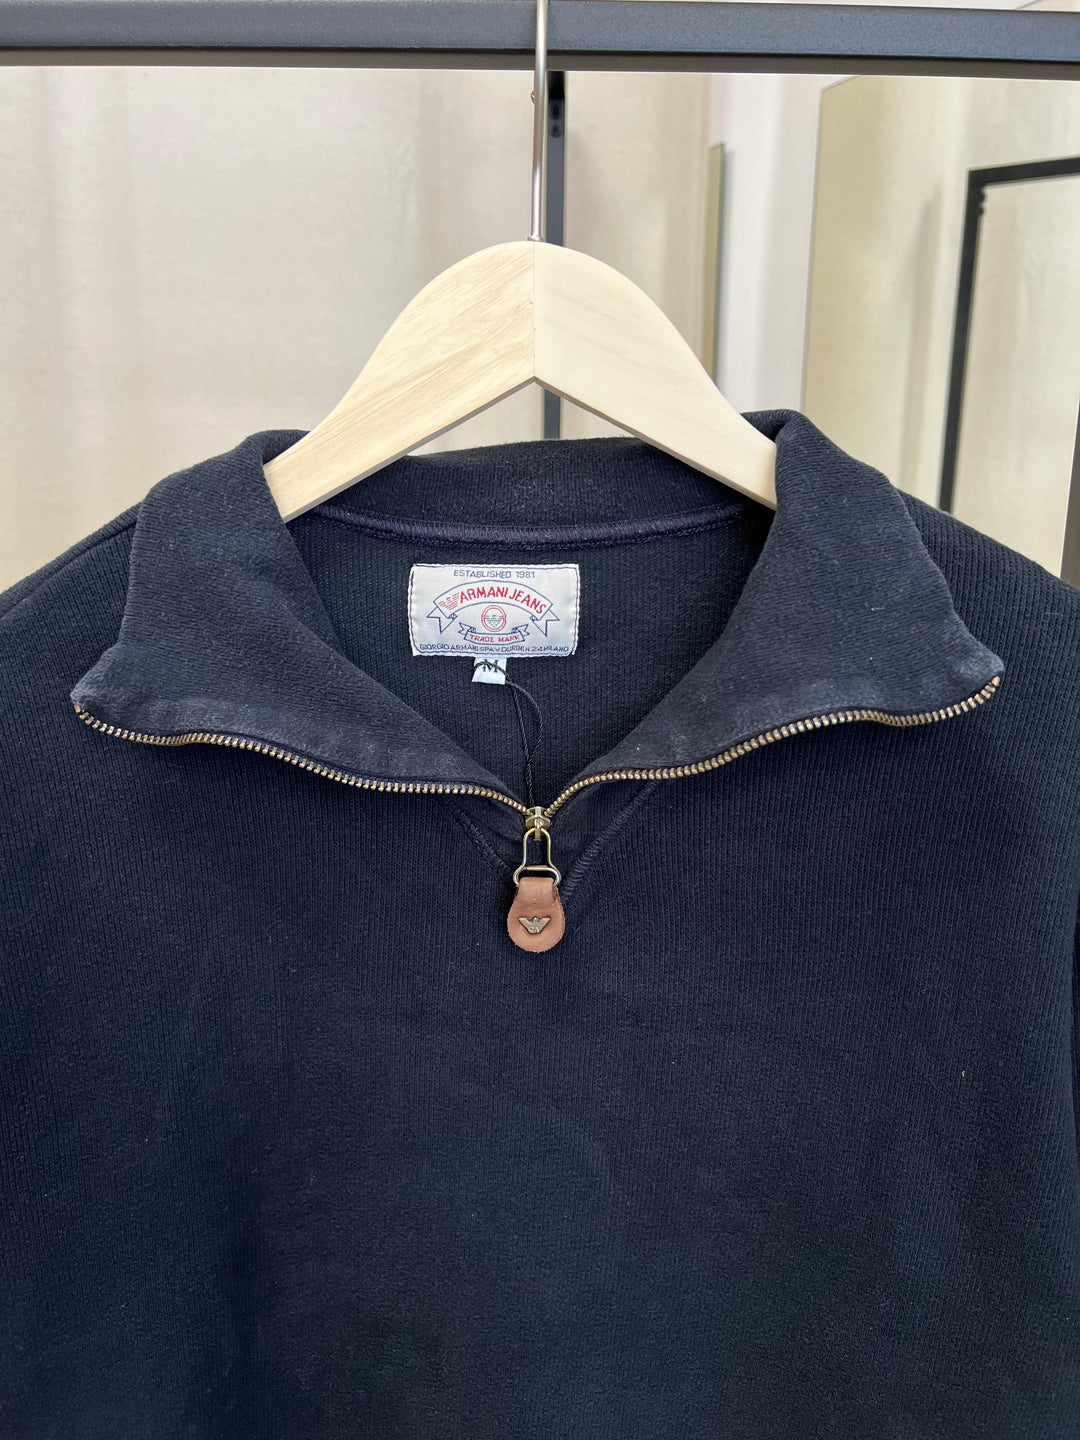 Vintage Armani 1/4 Zip Up Sweatshirt Women’s Medium